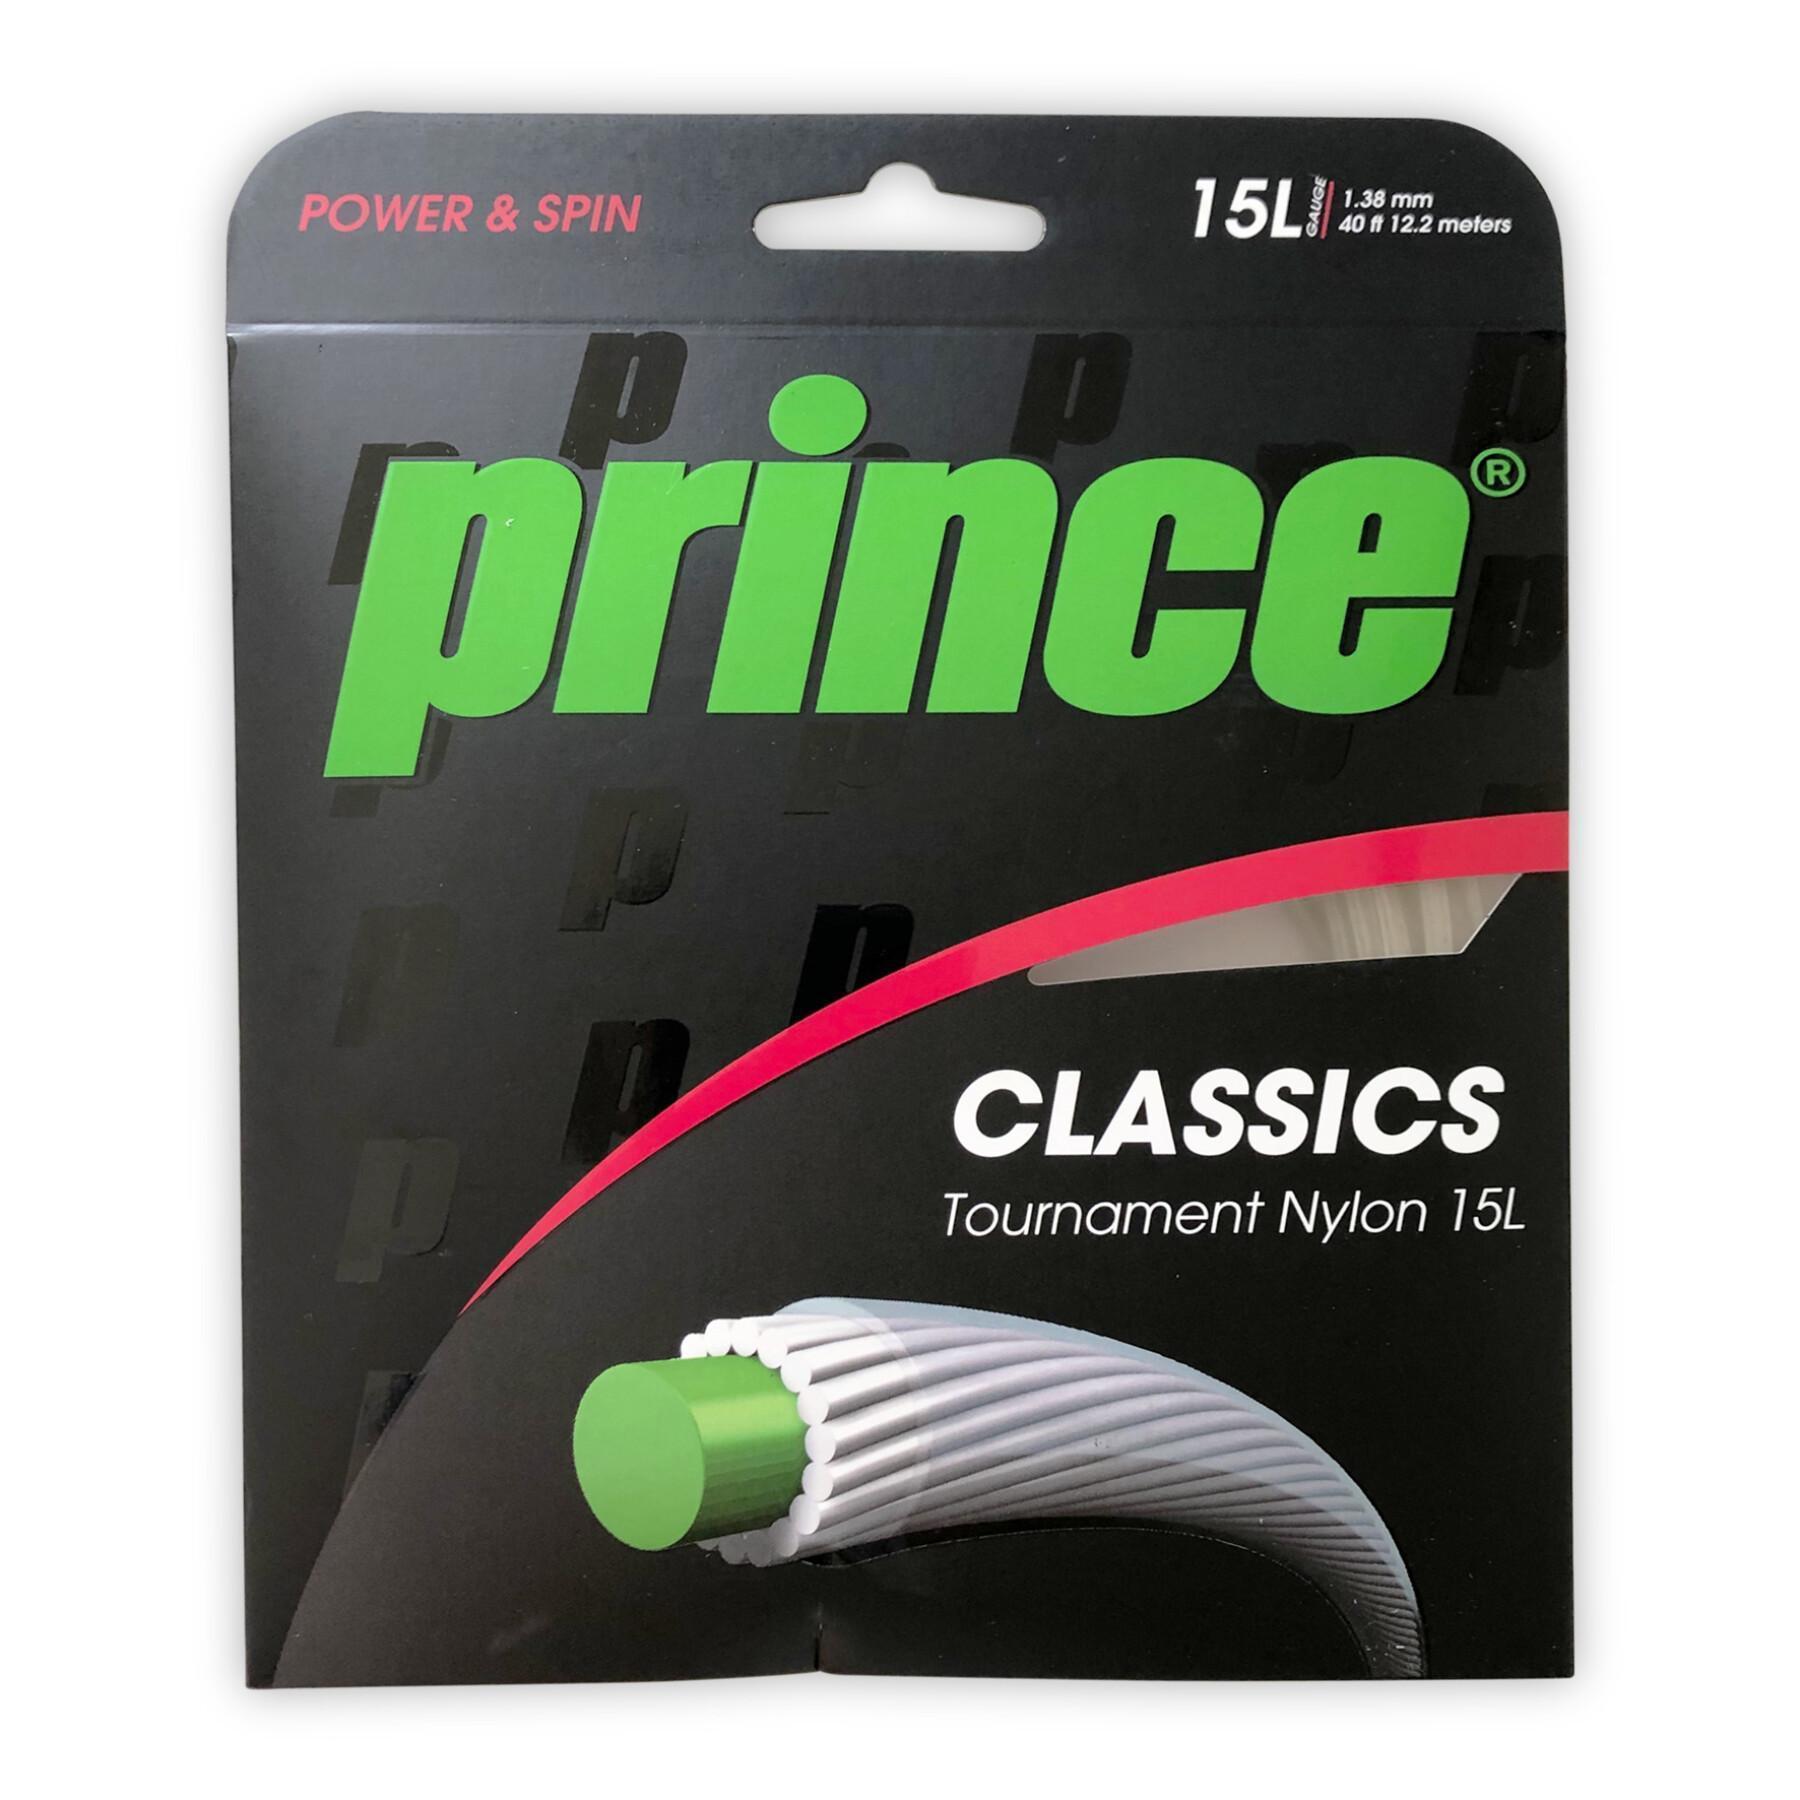 Cordas de ténis Prince Tournament nylon